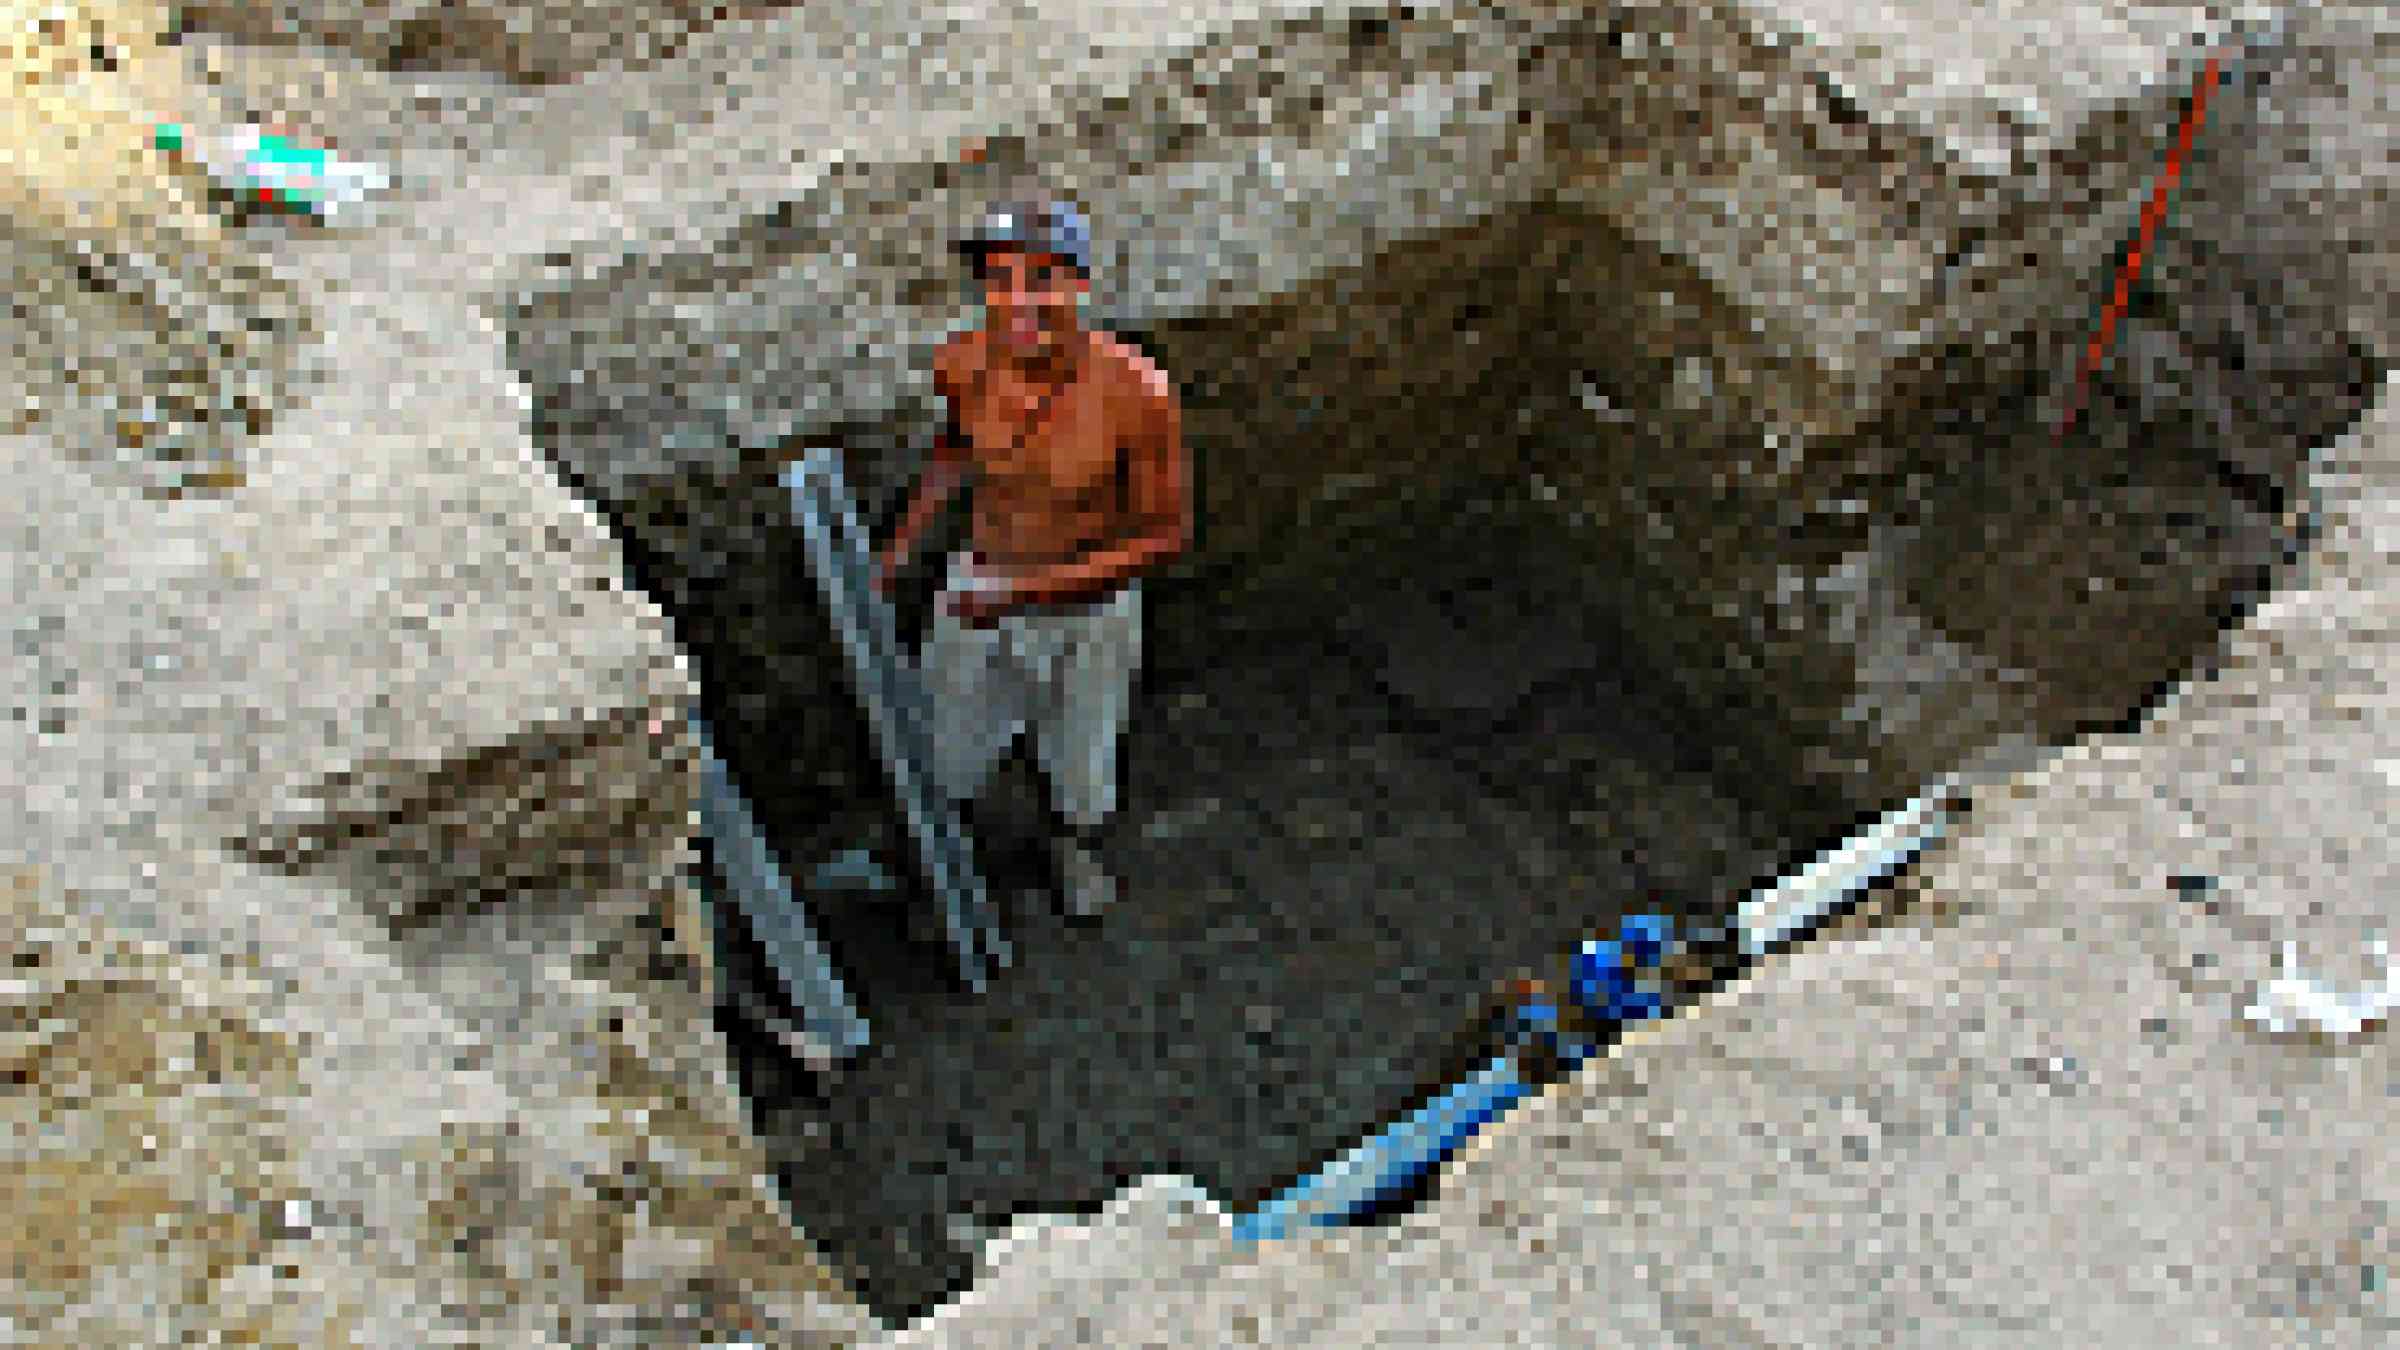 Photo of Guadalajara's new sewer & water installation, copyright Flickr user, Wonderlane, Creative Commons Attribution 2.0 Generic, http://www.flickr.com/photos/wonderlane/4643818982/